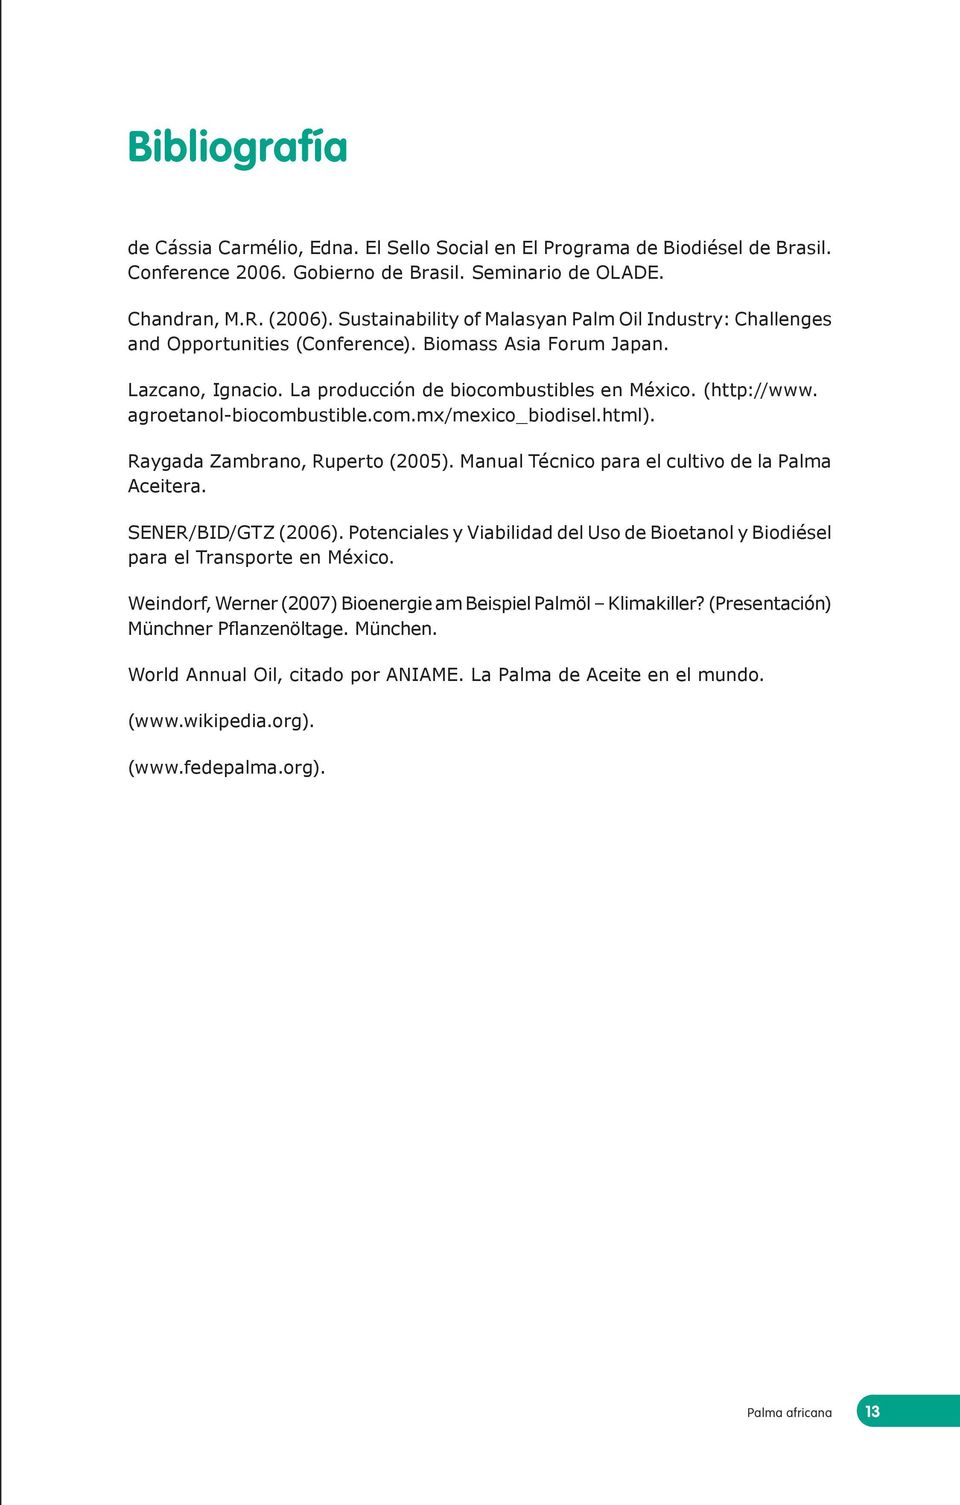 agroetanol-biocombustible.com.mx/mexico_biodisel.html). Raygada Zambrano, Ruperto (2005). Manual Técnico para el cultivo de la Palma Aceitera. SENER/BID/GTZ (2006).